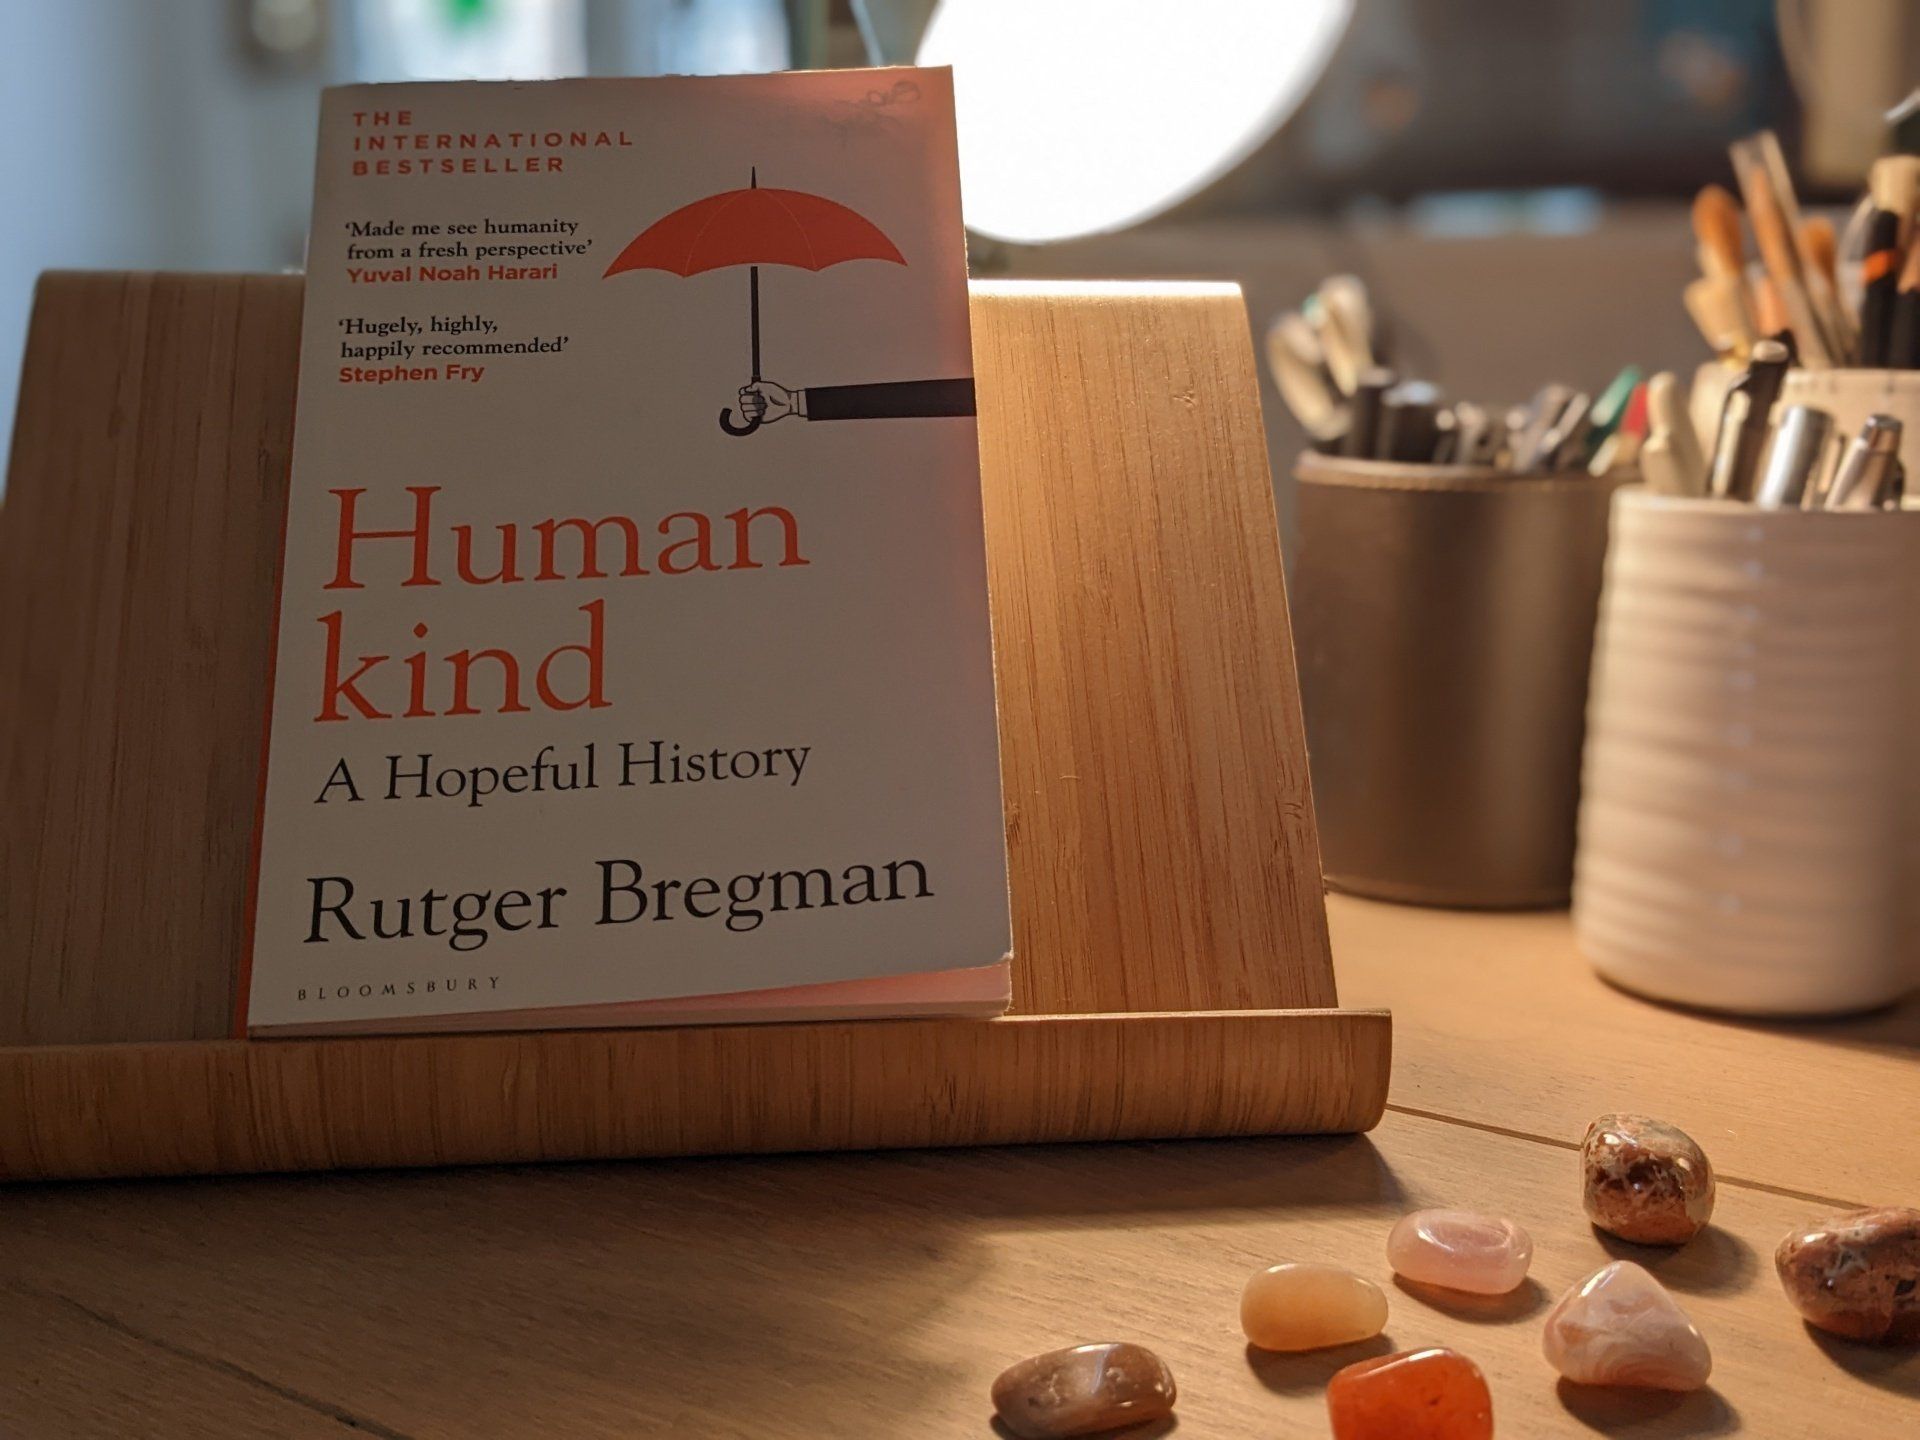 Humankind - A Hopeful History by Rutger Bregman